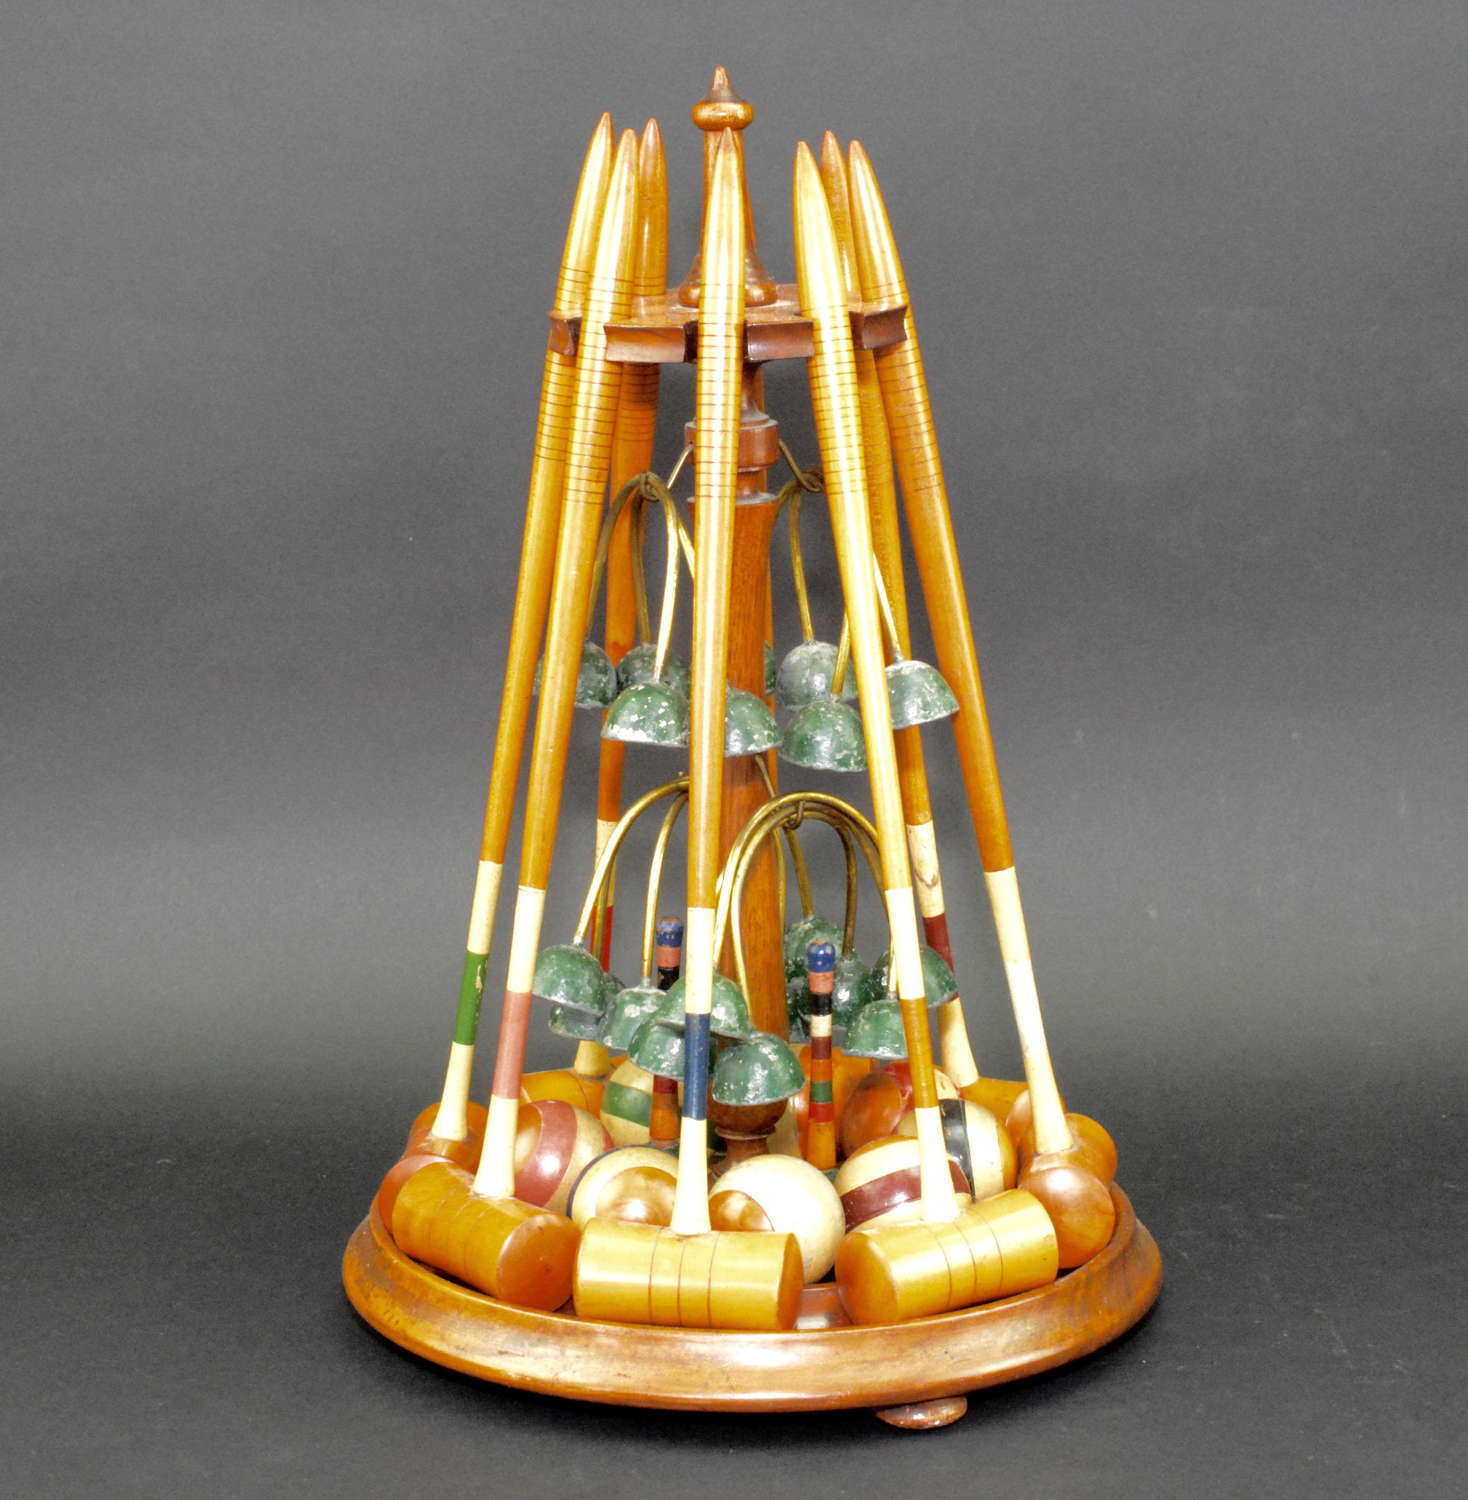 An original 19th C parlour game of a full miniature croquet set.